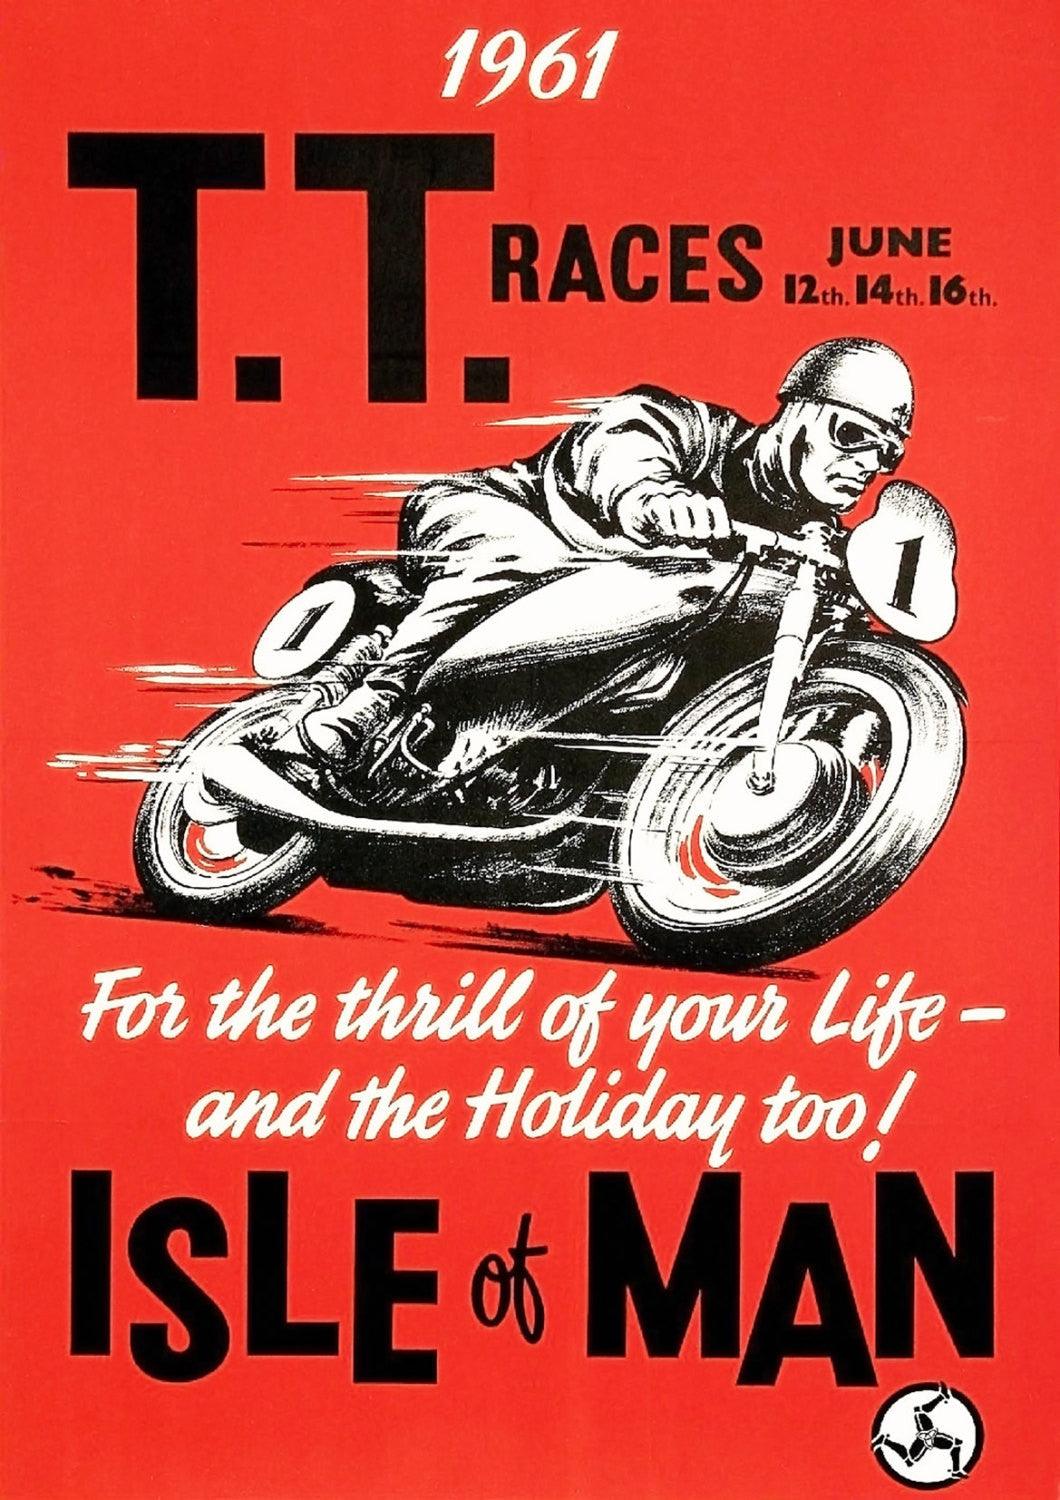 TT RACE POSTER: Vintage Isle of Mann Bike Race Advert - Pimlico Prints